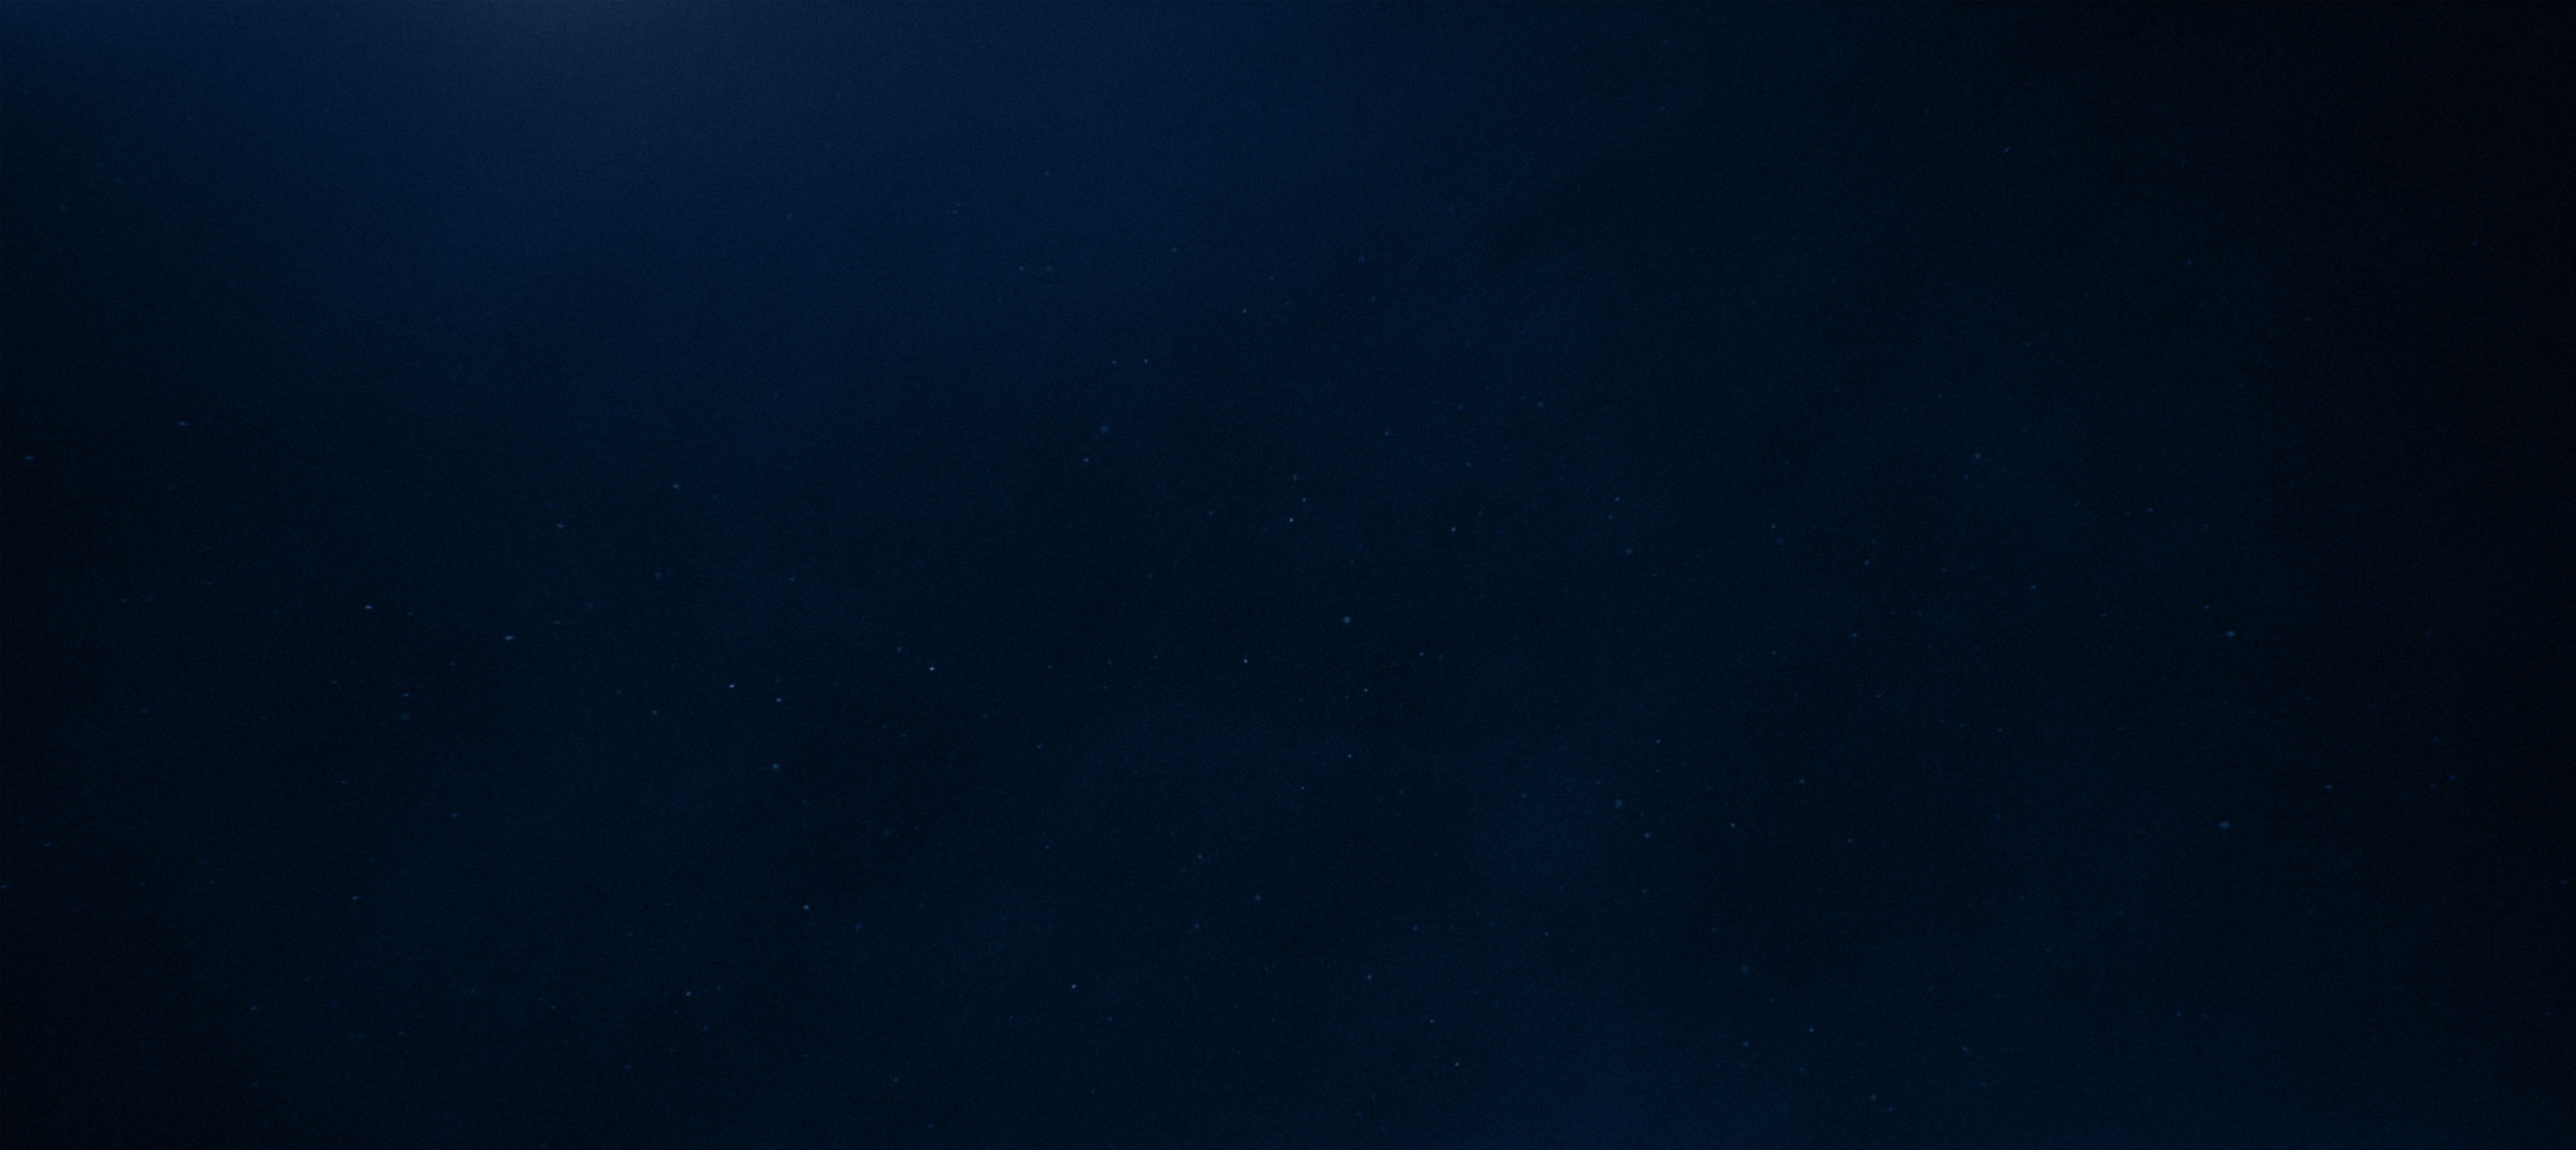 Achtergrond met texture - donkerblauwe sterrenhemel